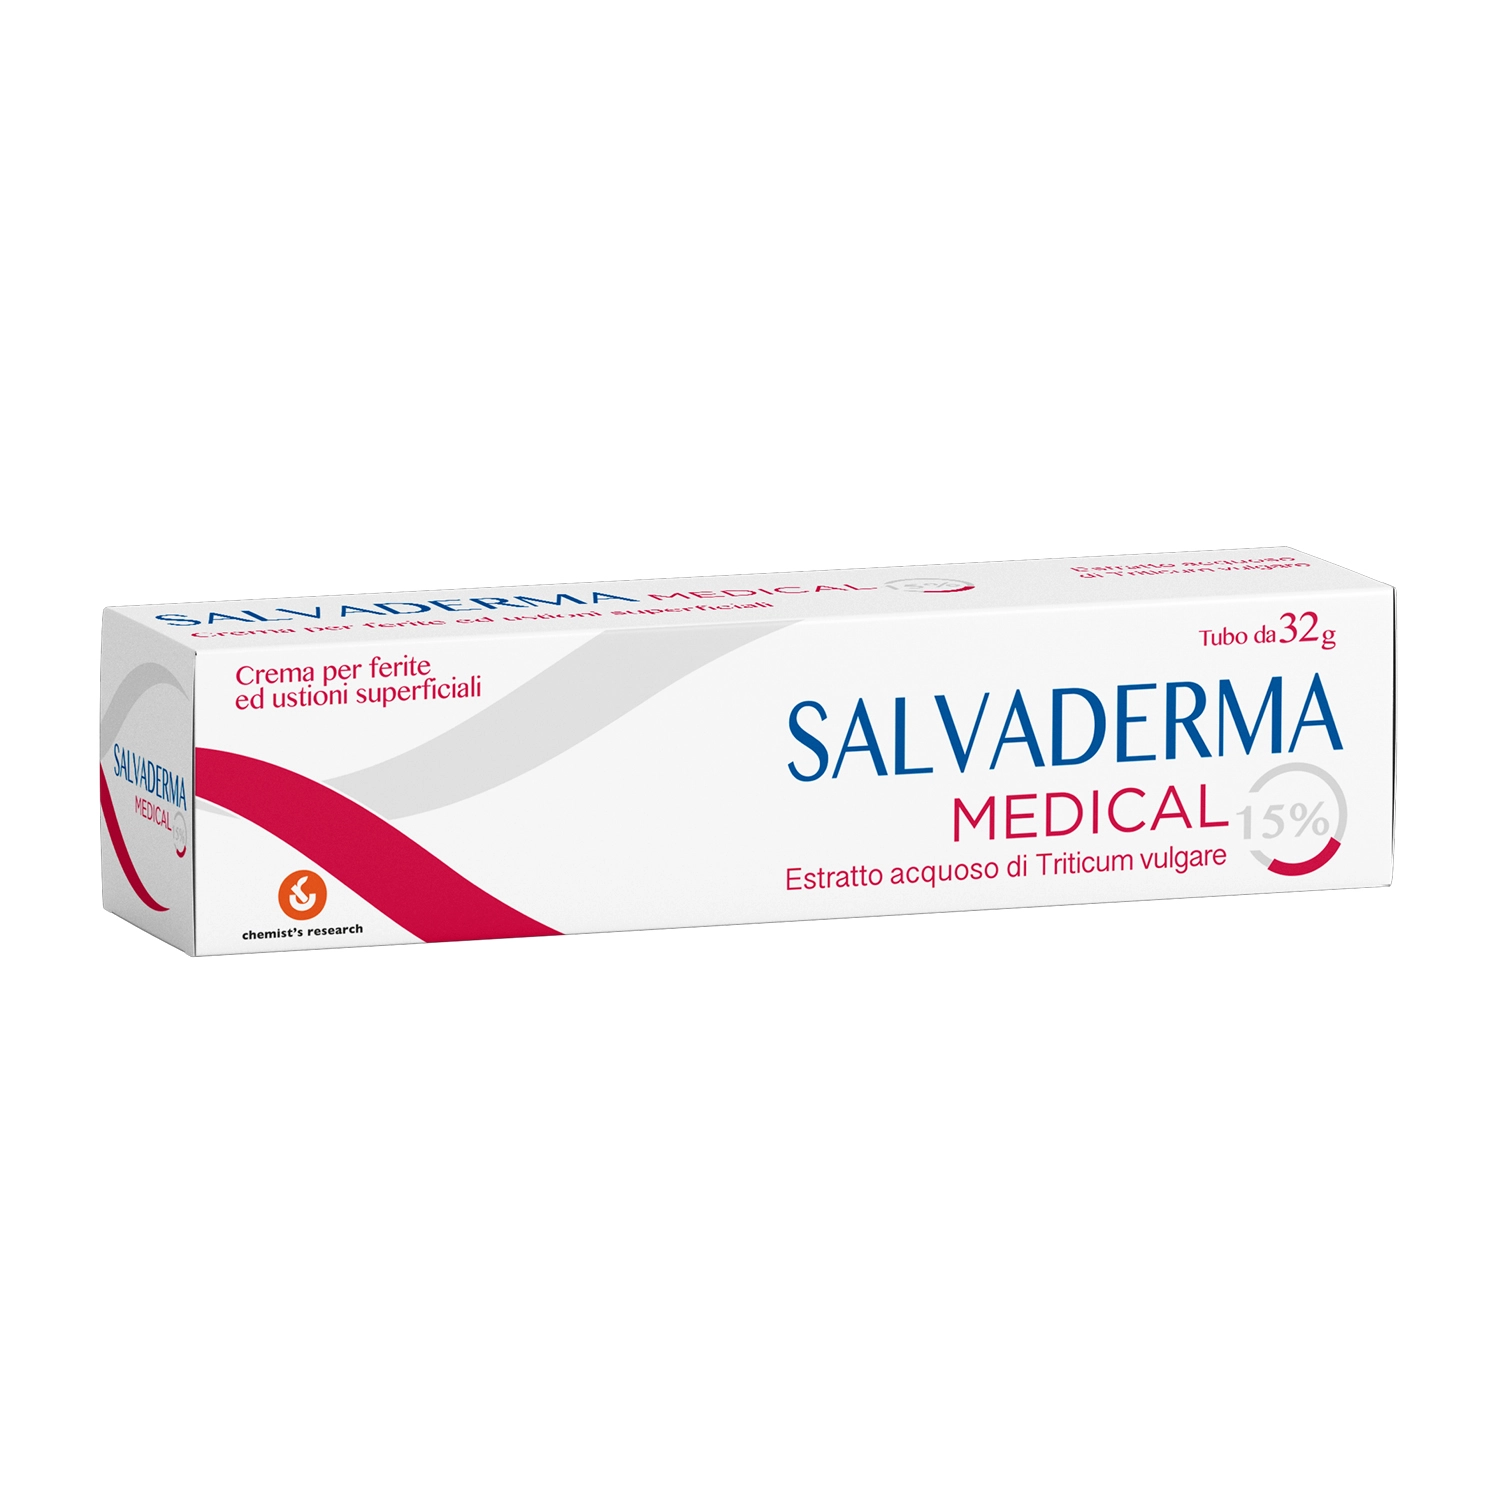 Salvaderma Medical 15% Crema